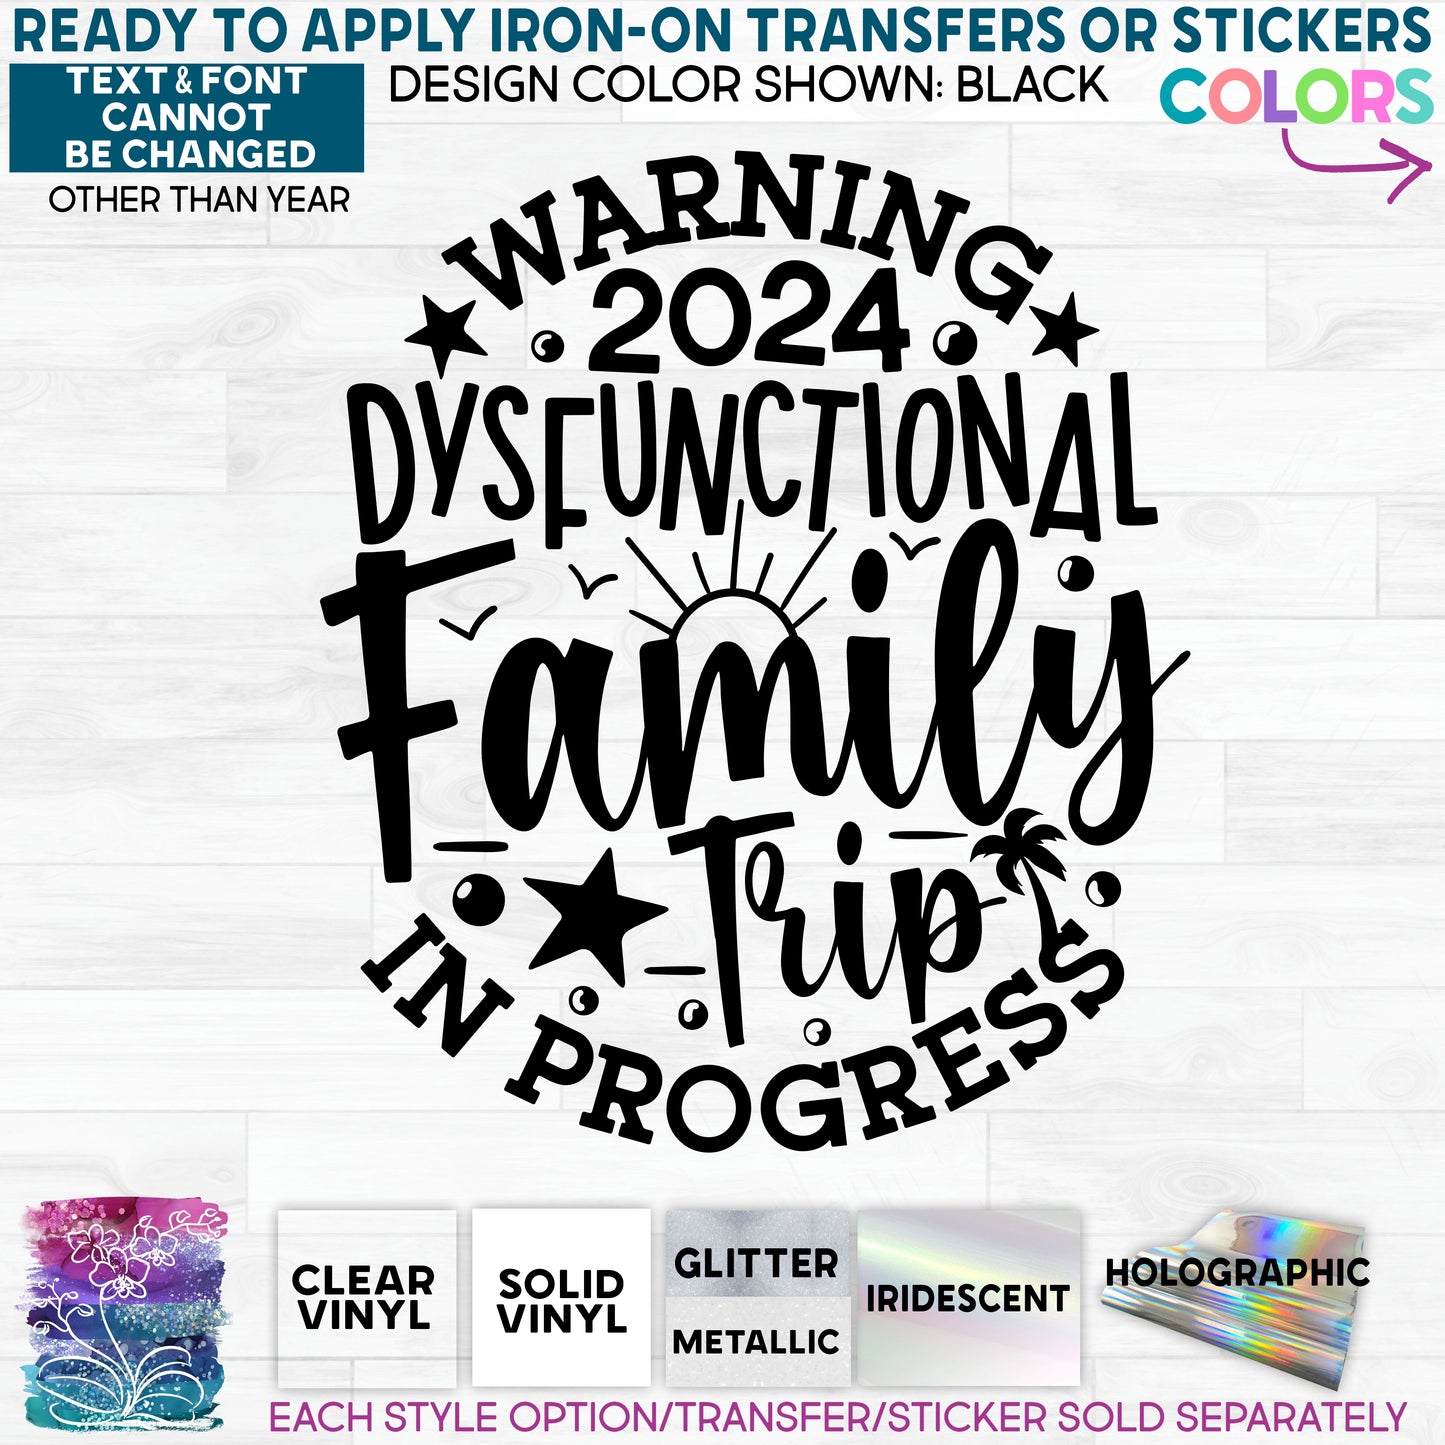 (s185-D) Warning Dysfunctional Family Trip in Progress Glitter or Vinyl Iron-On Transfer or Sticker